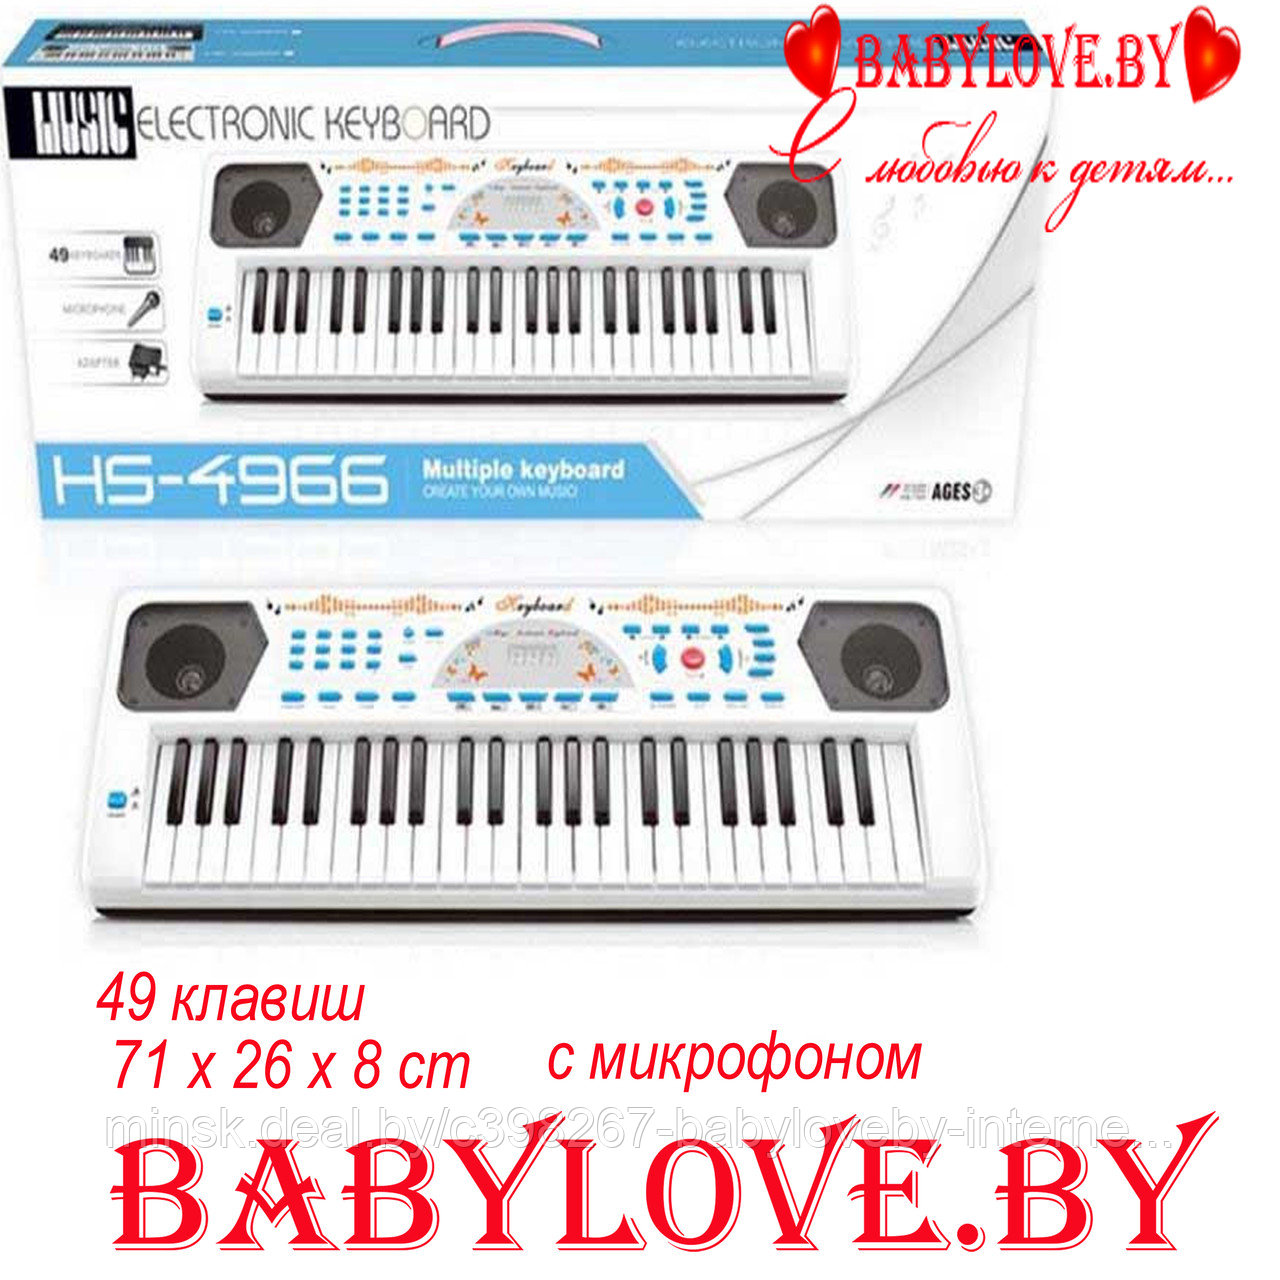 Детский синтезатор на 49 клавиш, с микрофоном, от сети  HS4966B размер 71 x 26 x 8 cm